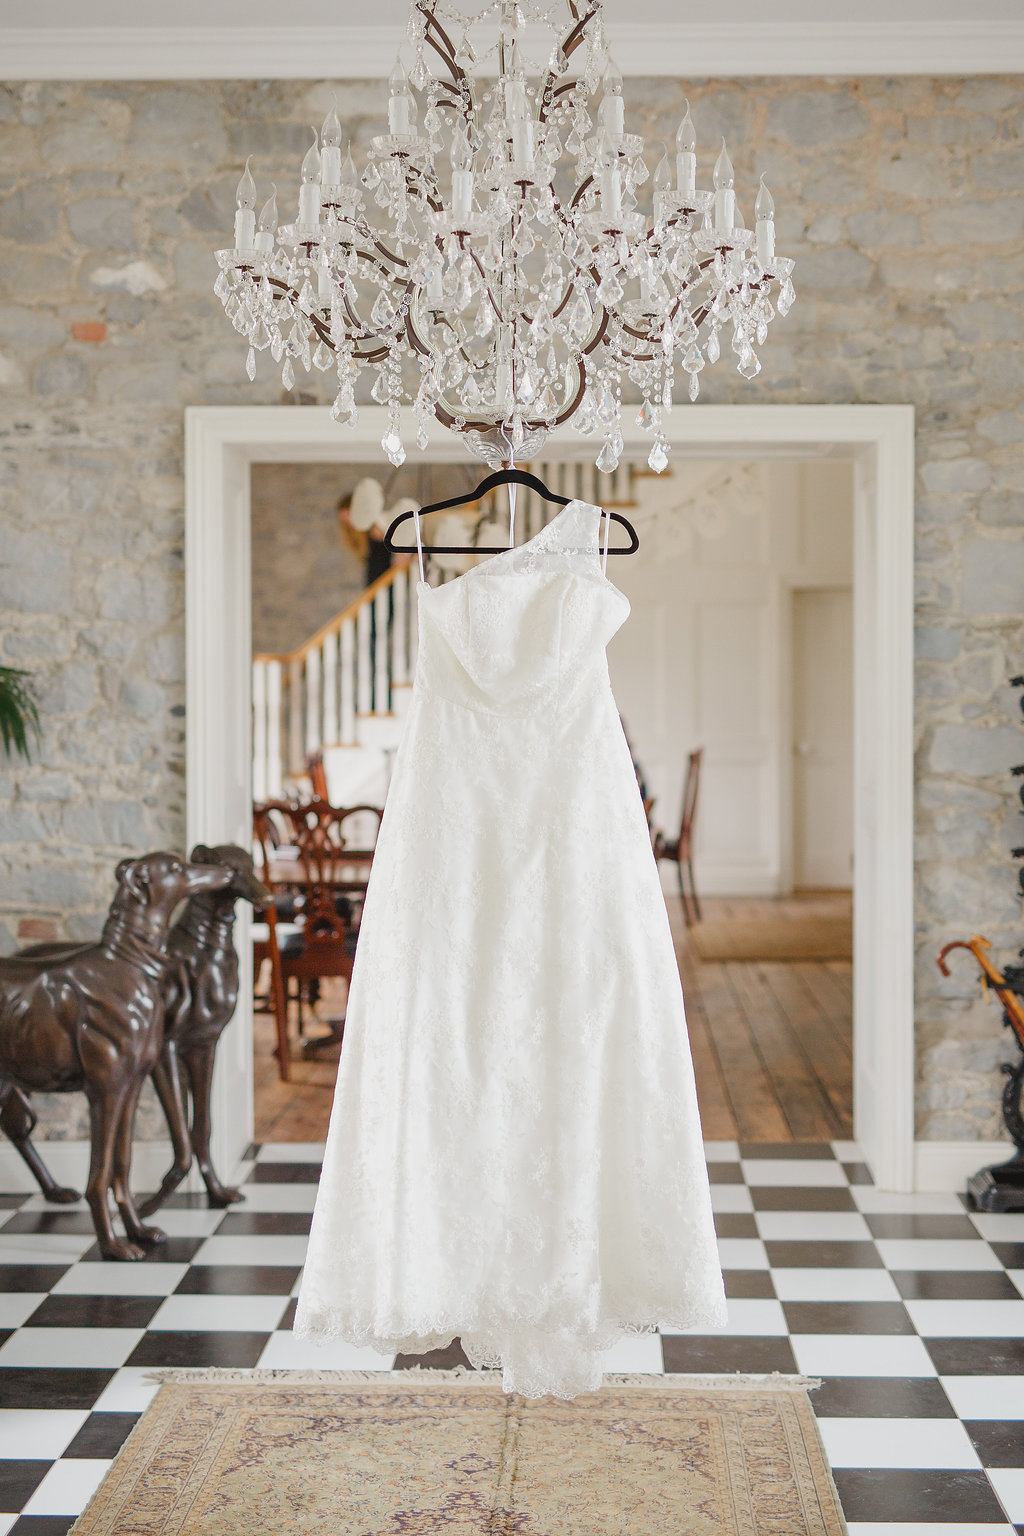 An Intimate Springfield Castle Ireland Wedding - The Overwhelmed Bride Wedding Blog